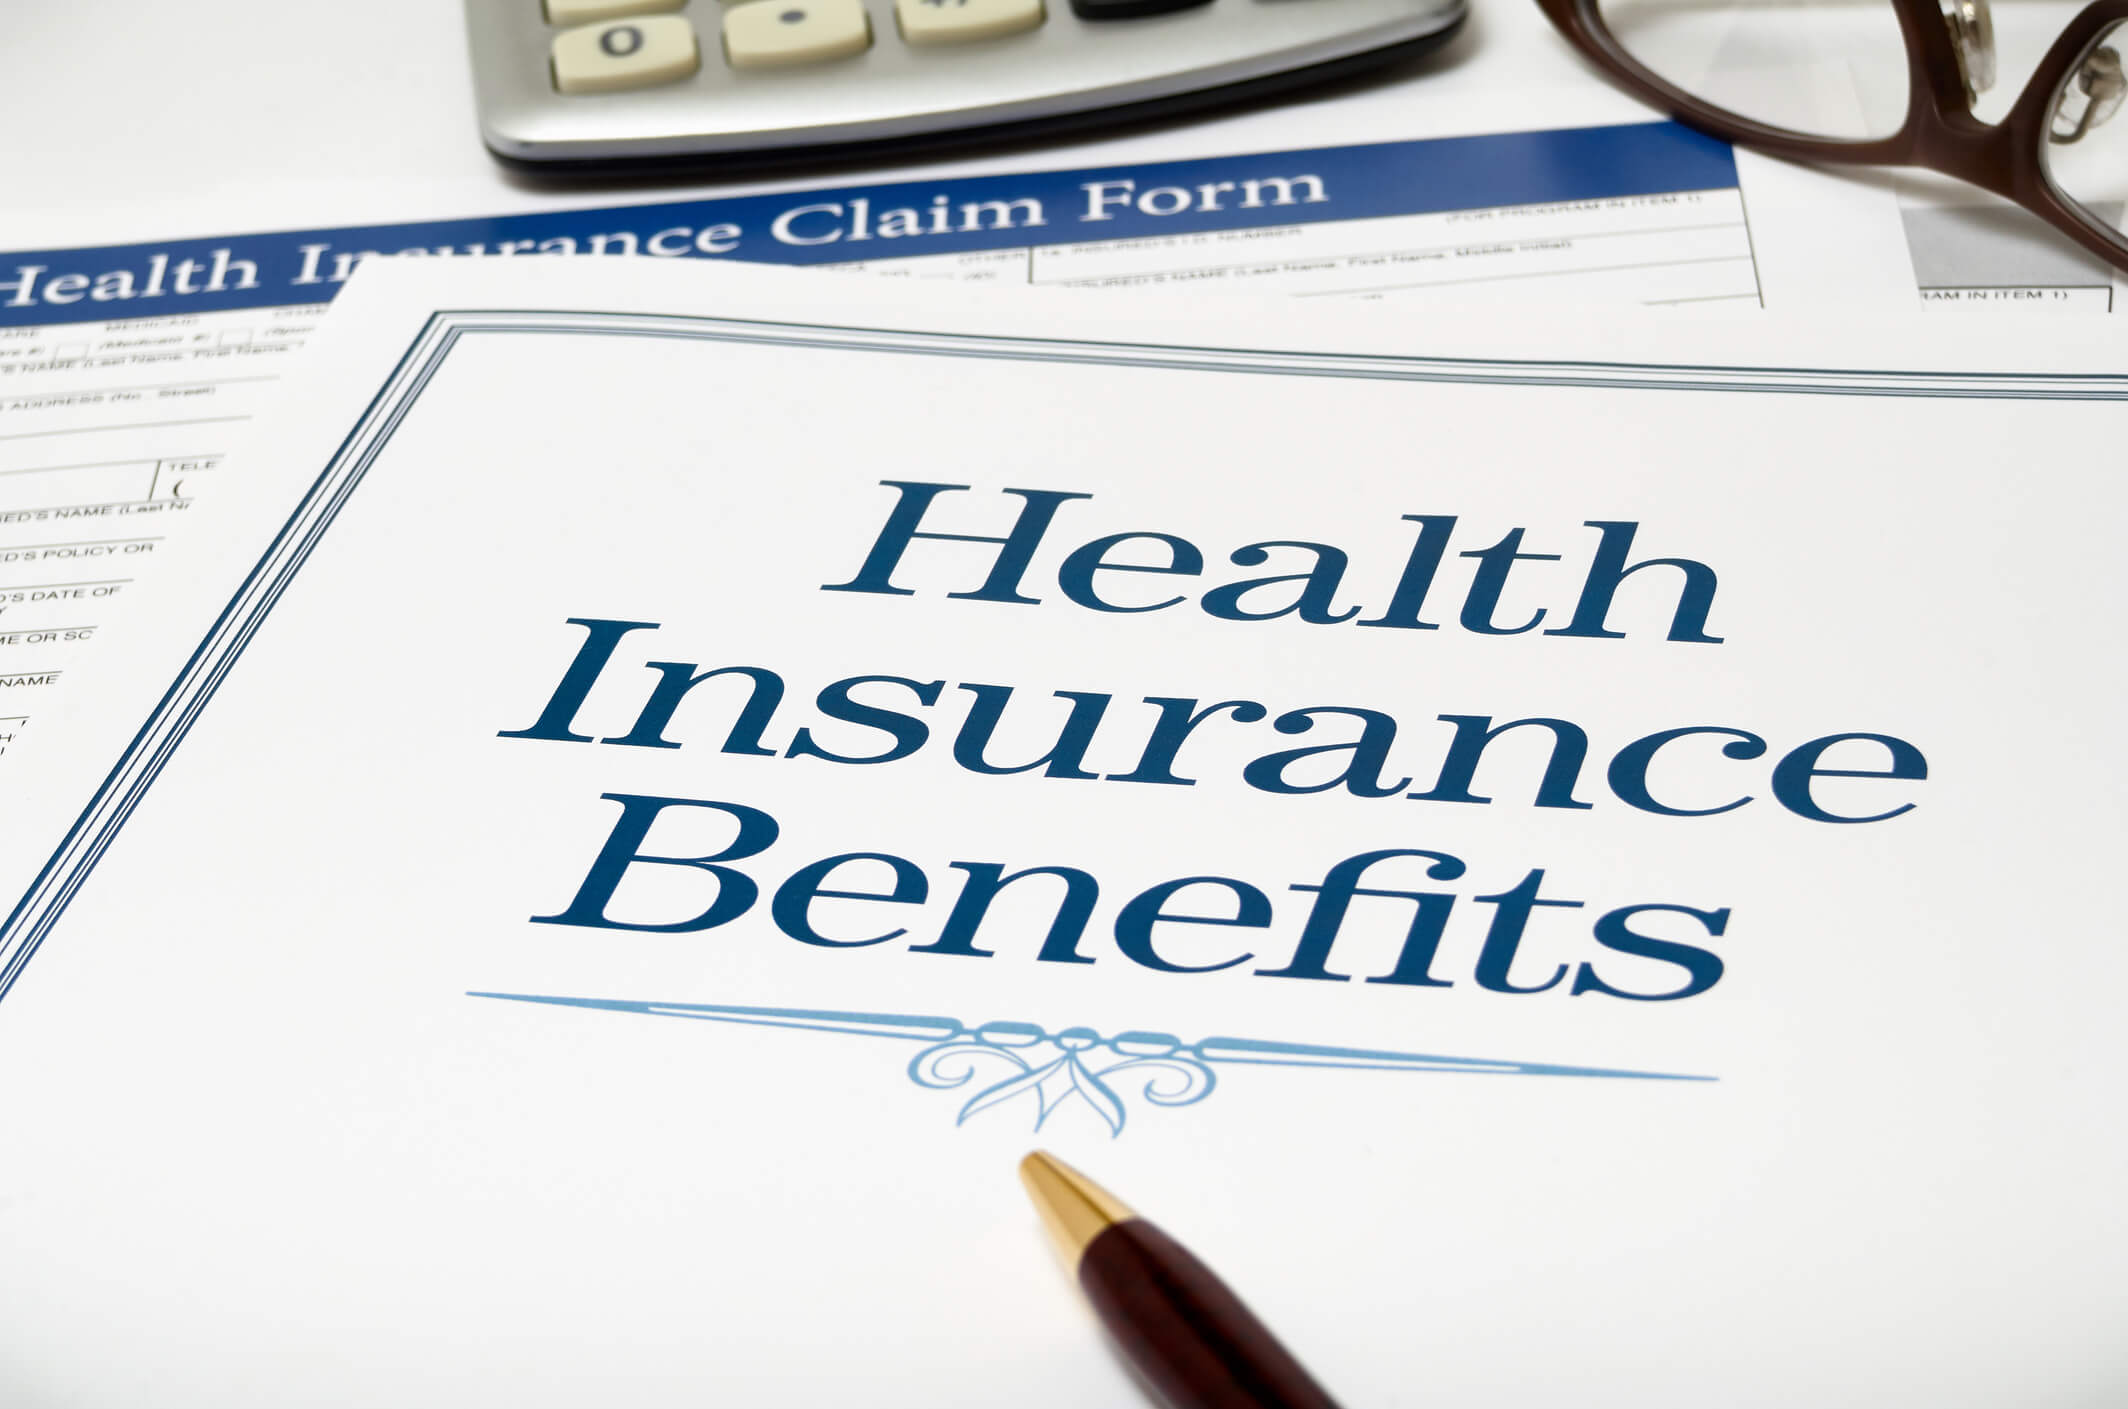 Health insurance benefits form